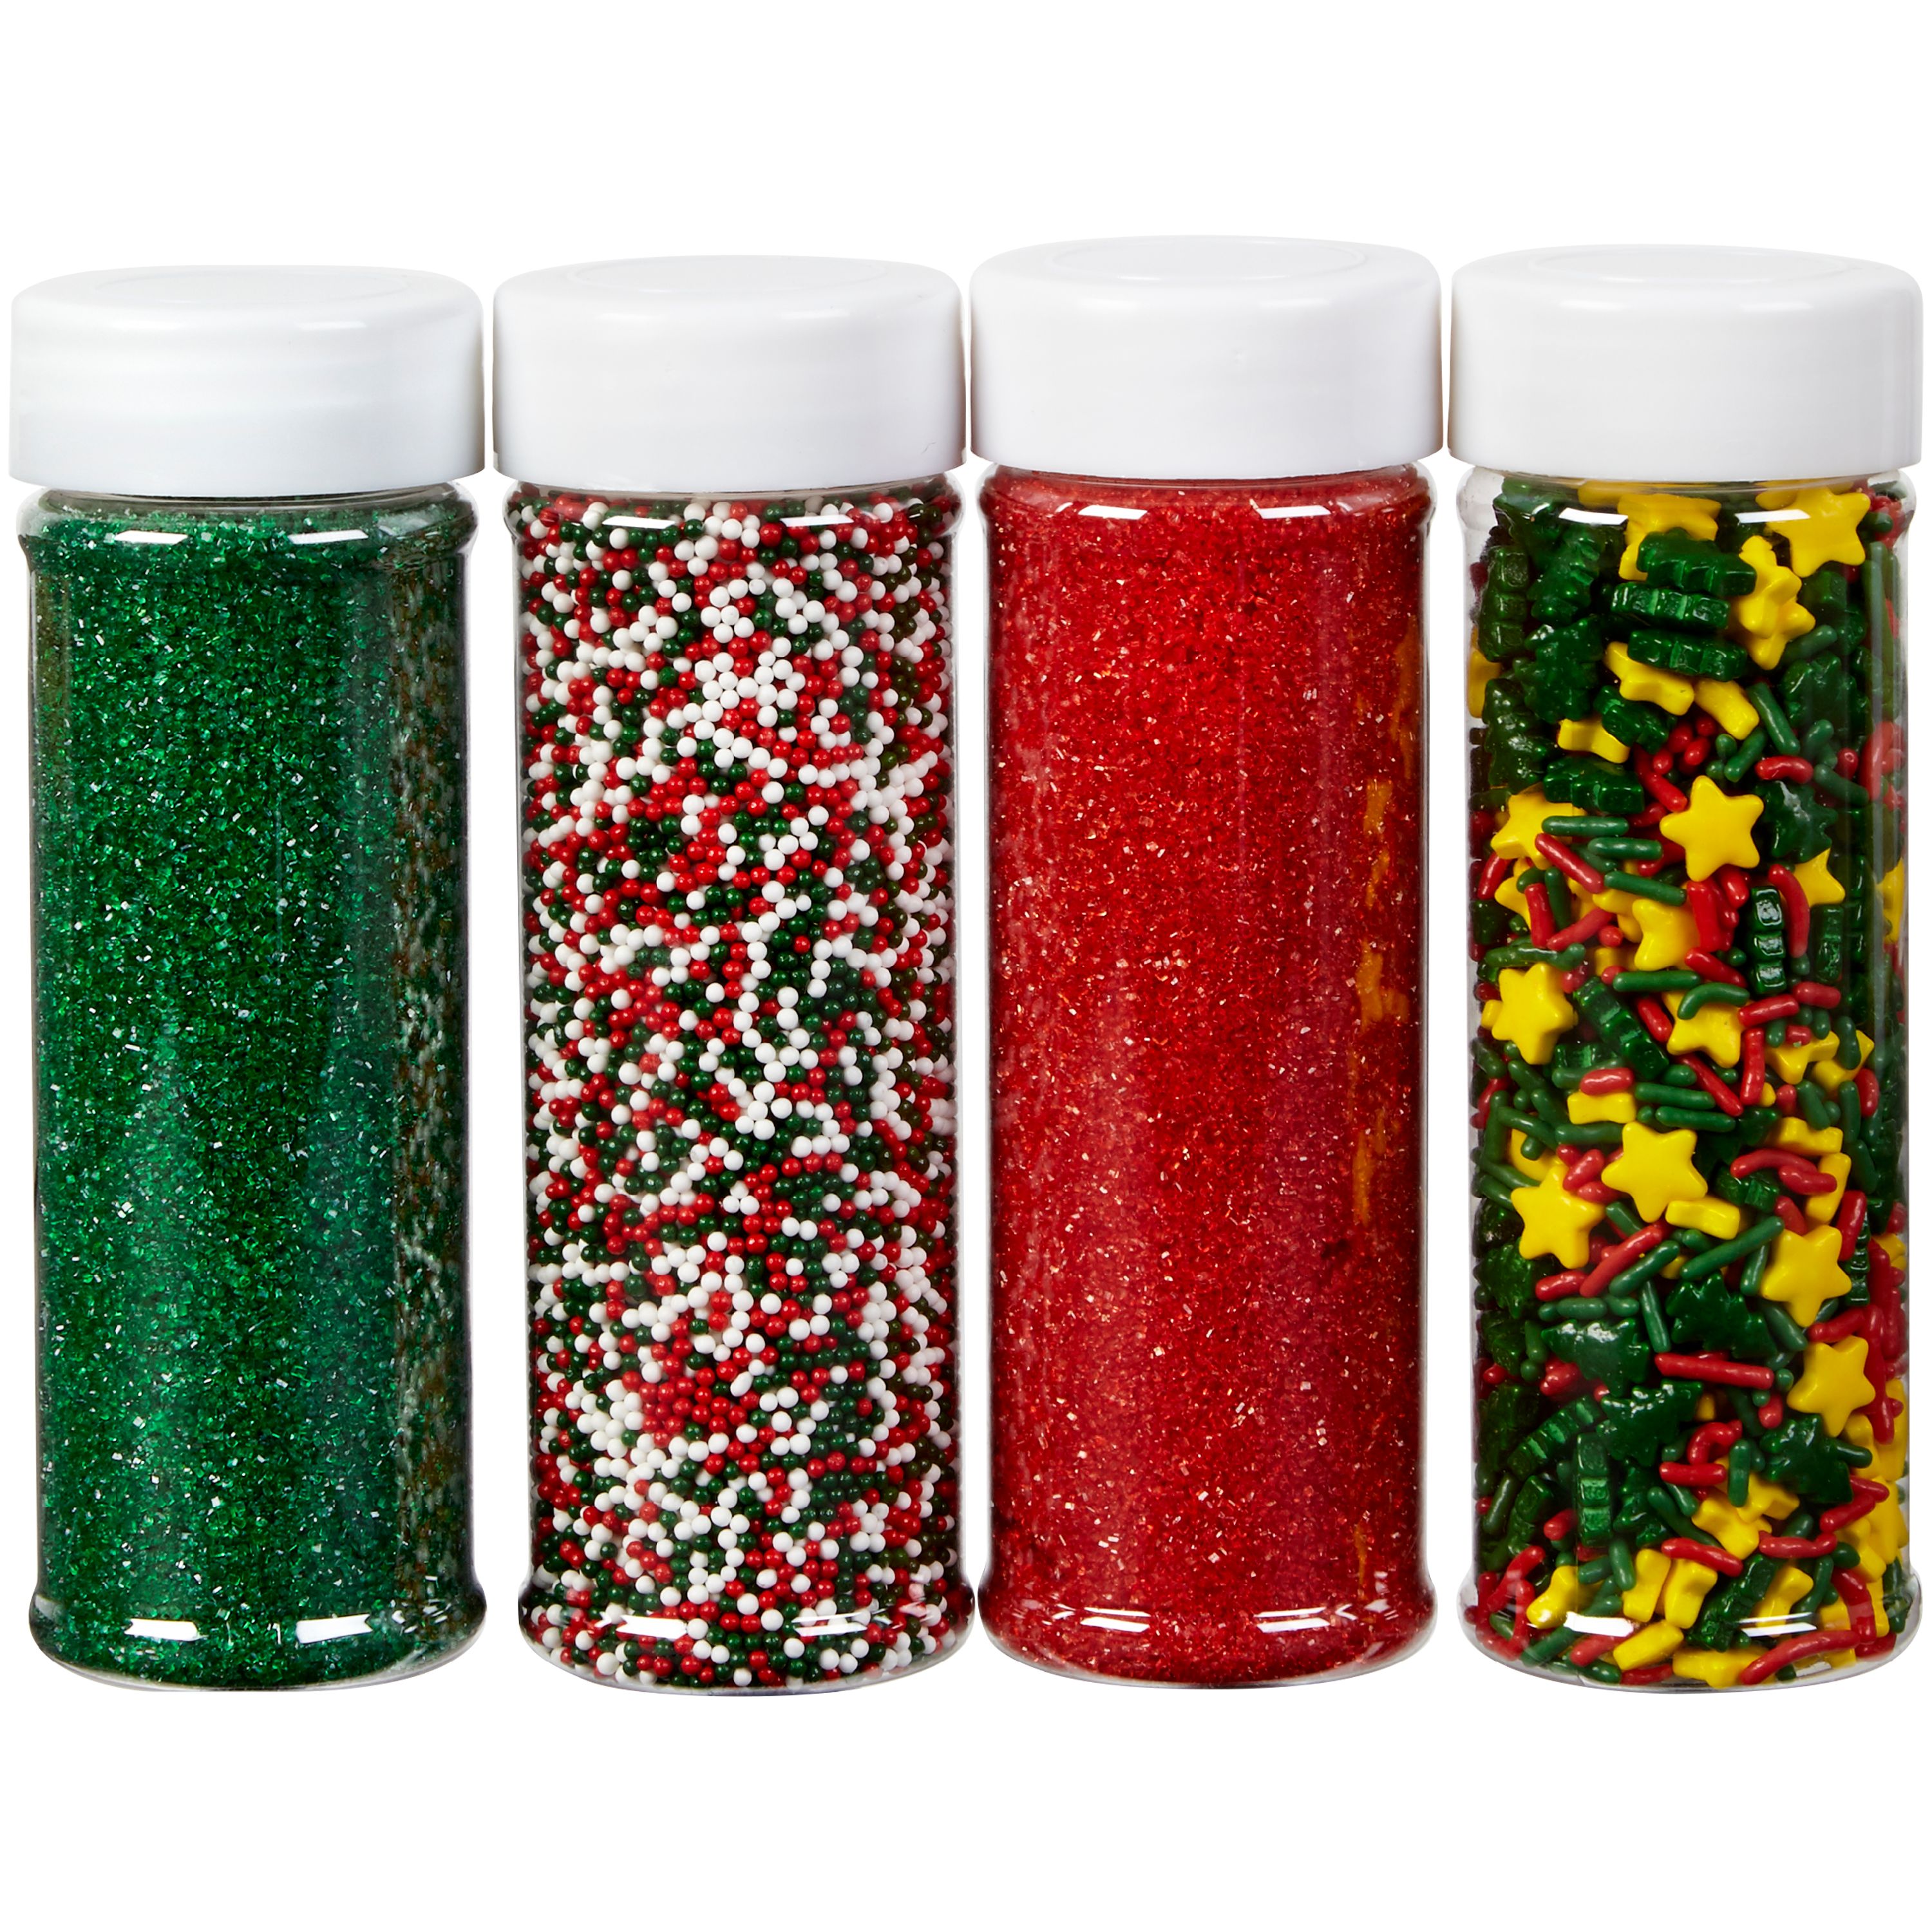 Wilton Sprinkles Holiday Christmas Mega Set, 4 pack, 19.3 oz. - image 1 of 7